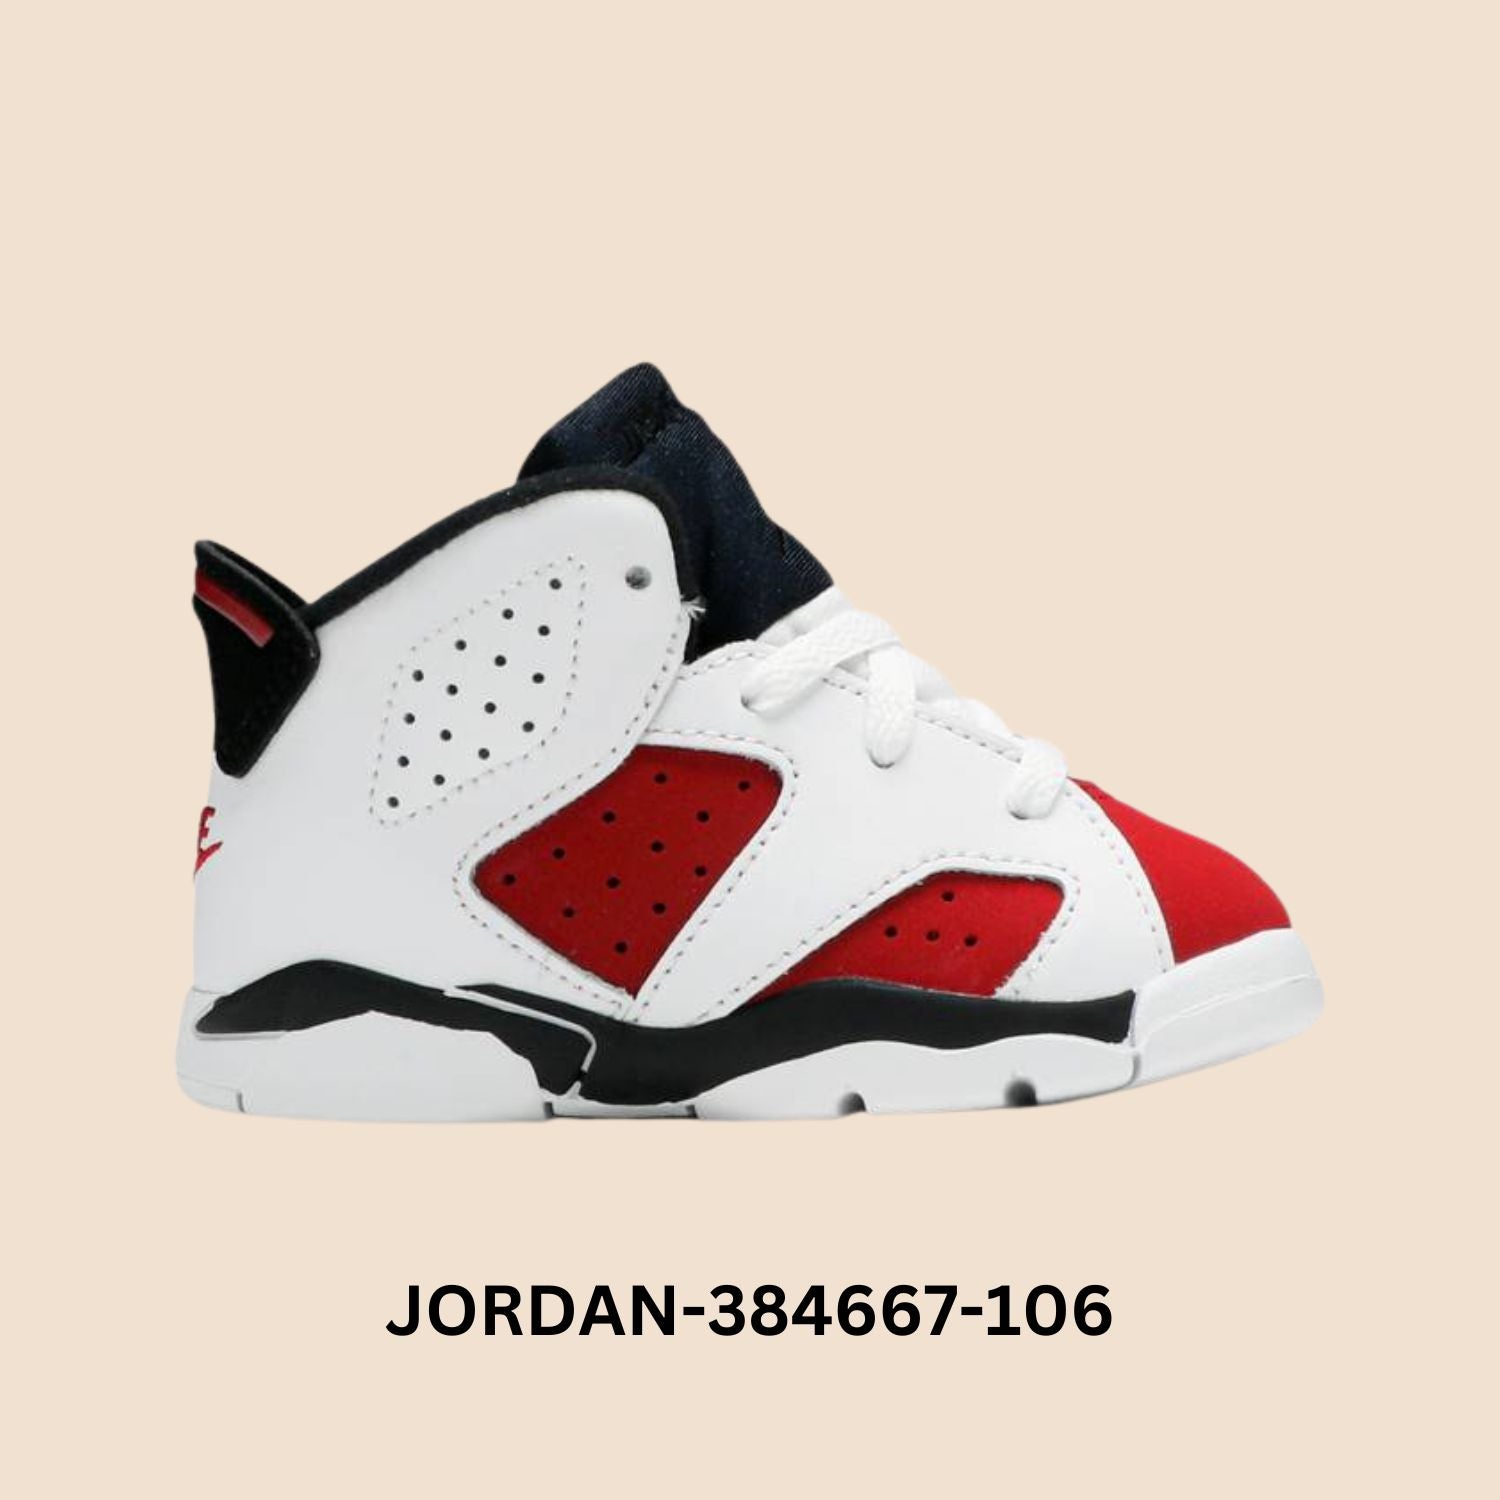 Air Jordan 6 Retro "Carmine" Toddlers Style# 384667-106